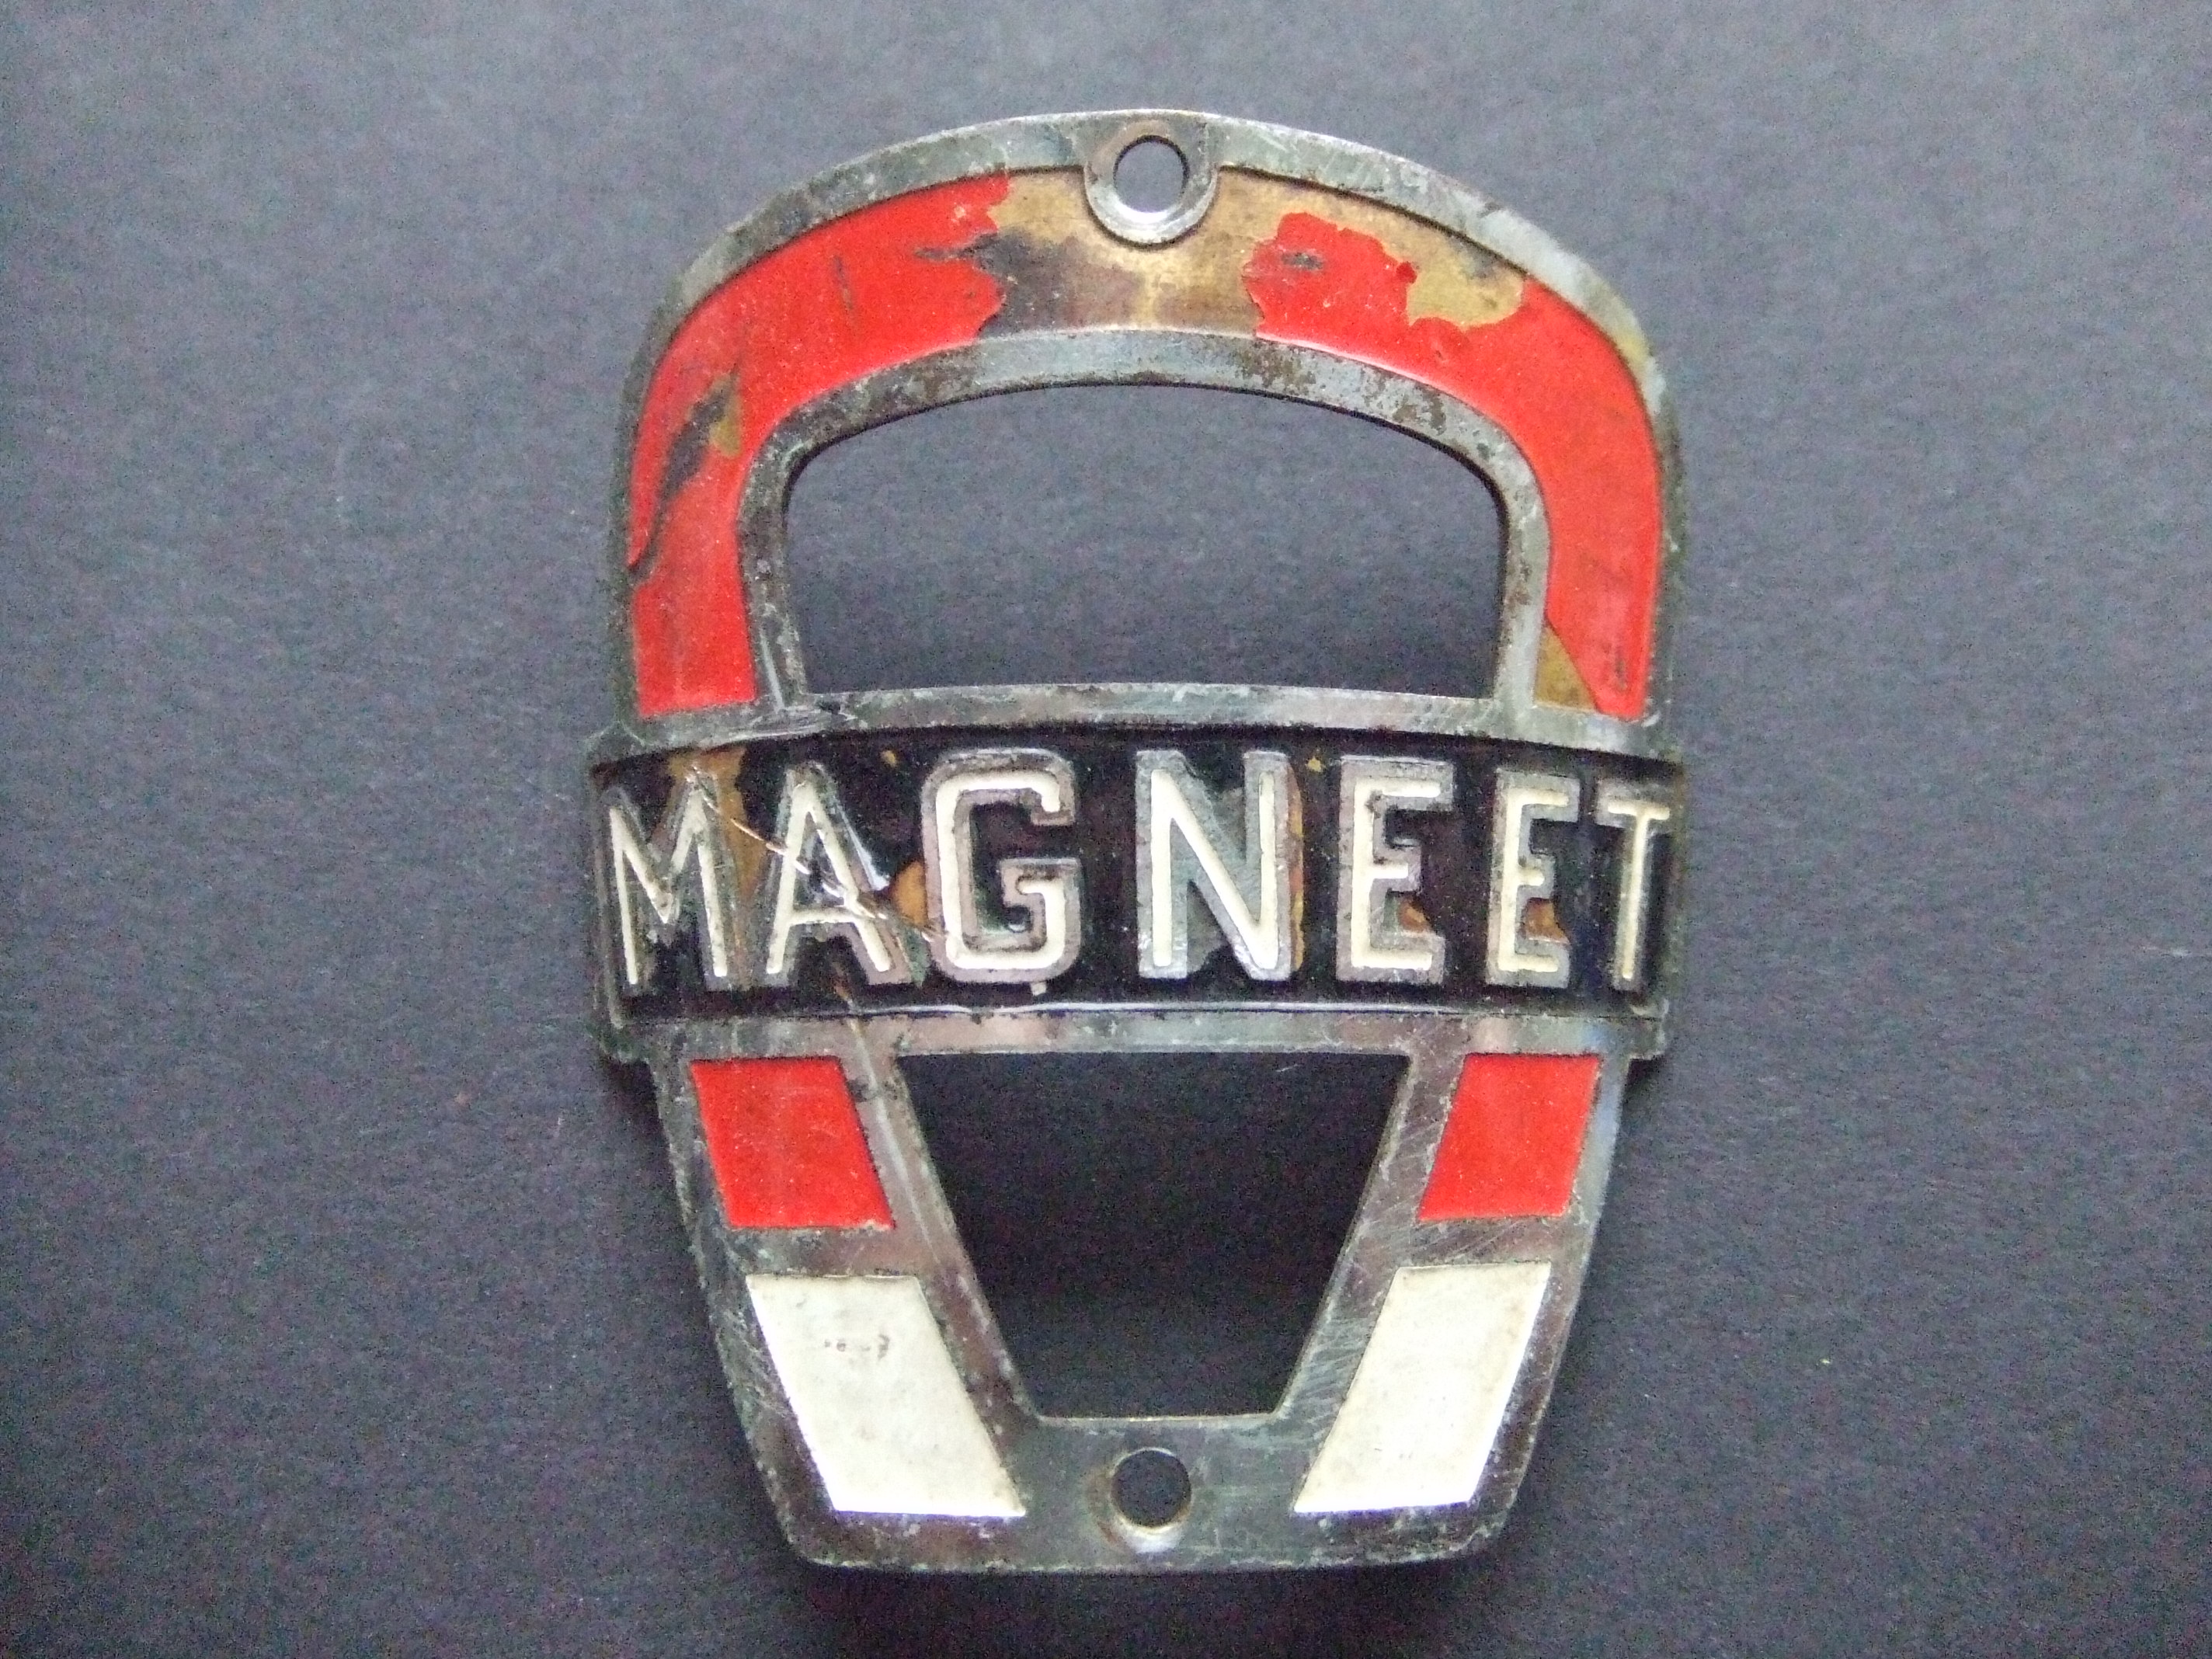 Magneet Rijwielen, Motorenfabriek Weesp oud balhoofdplaatje 4